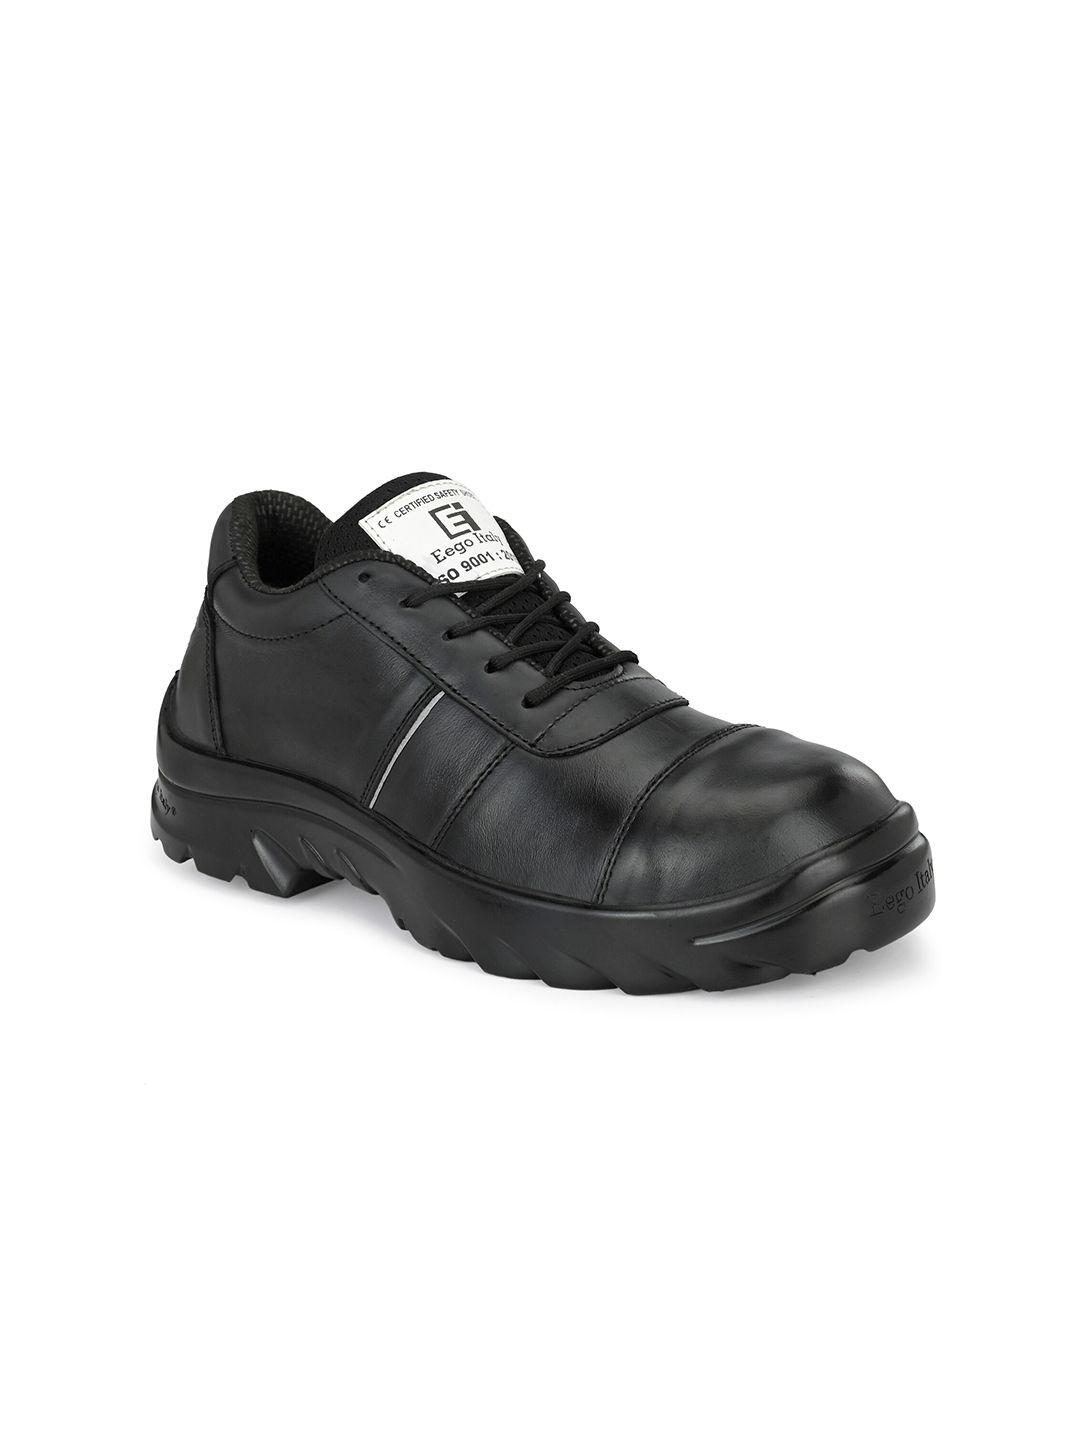 eego italy men black leather trekking shoes